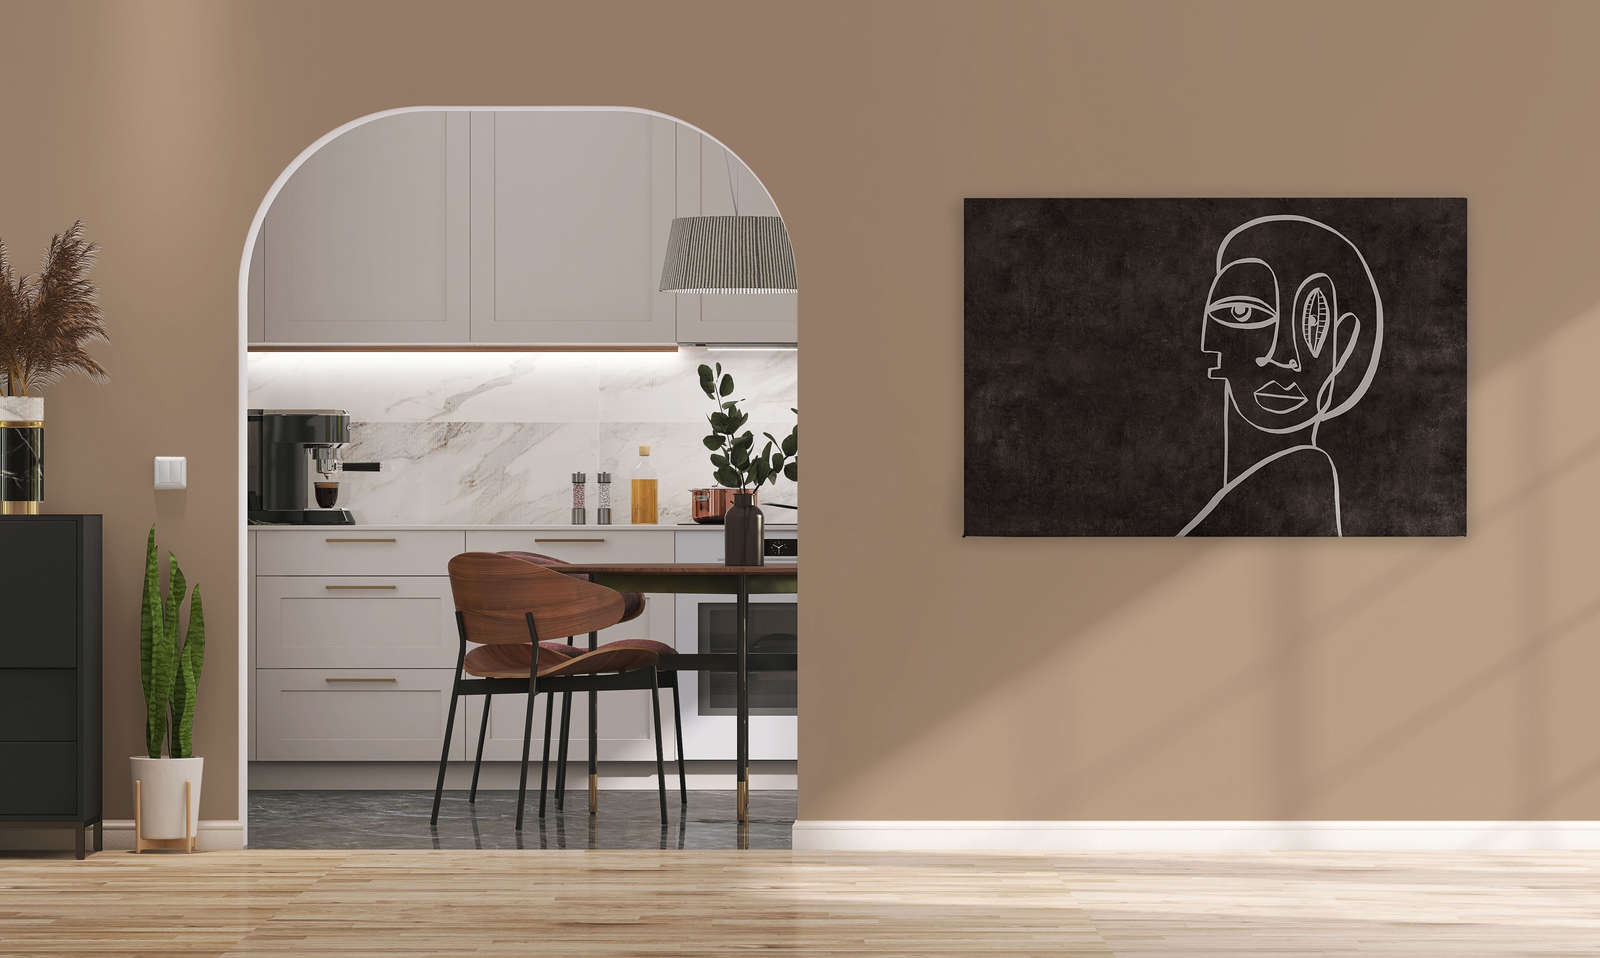             Palomas Room 2 - Schwarzes Leinwandbild abstraktes Line Art Portrait – 1,20 m x 0,80 m
        